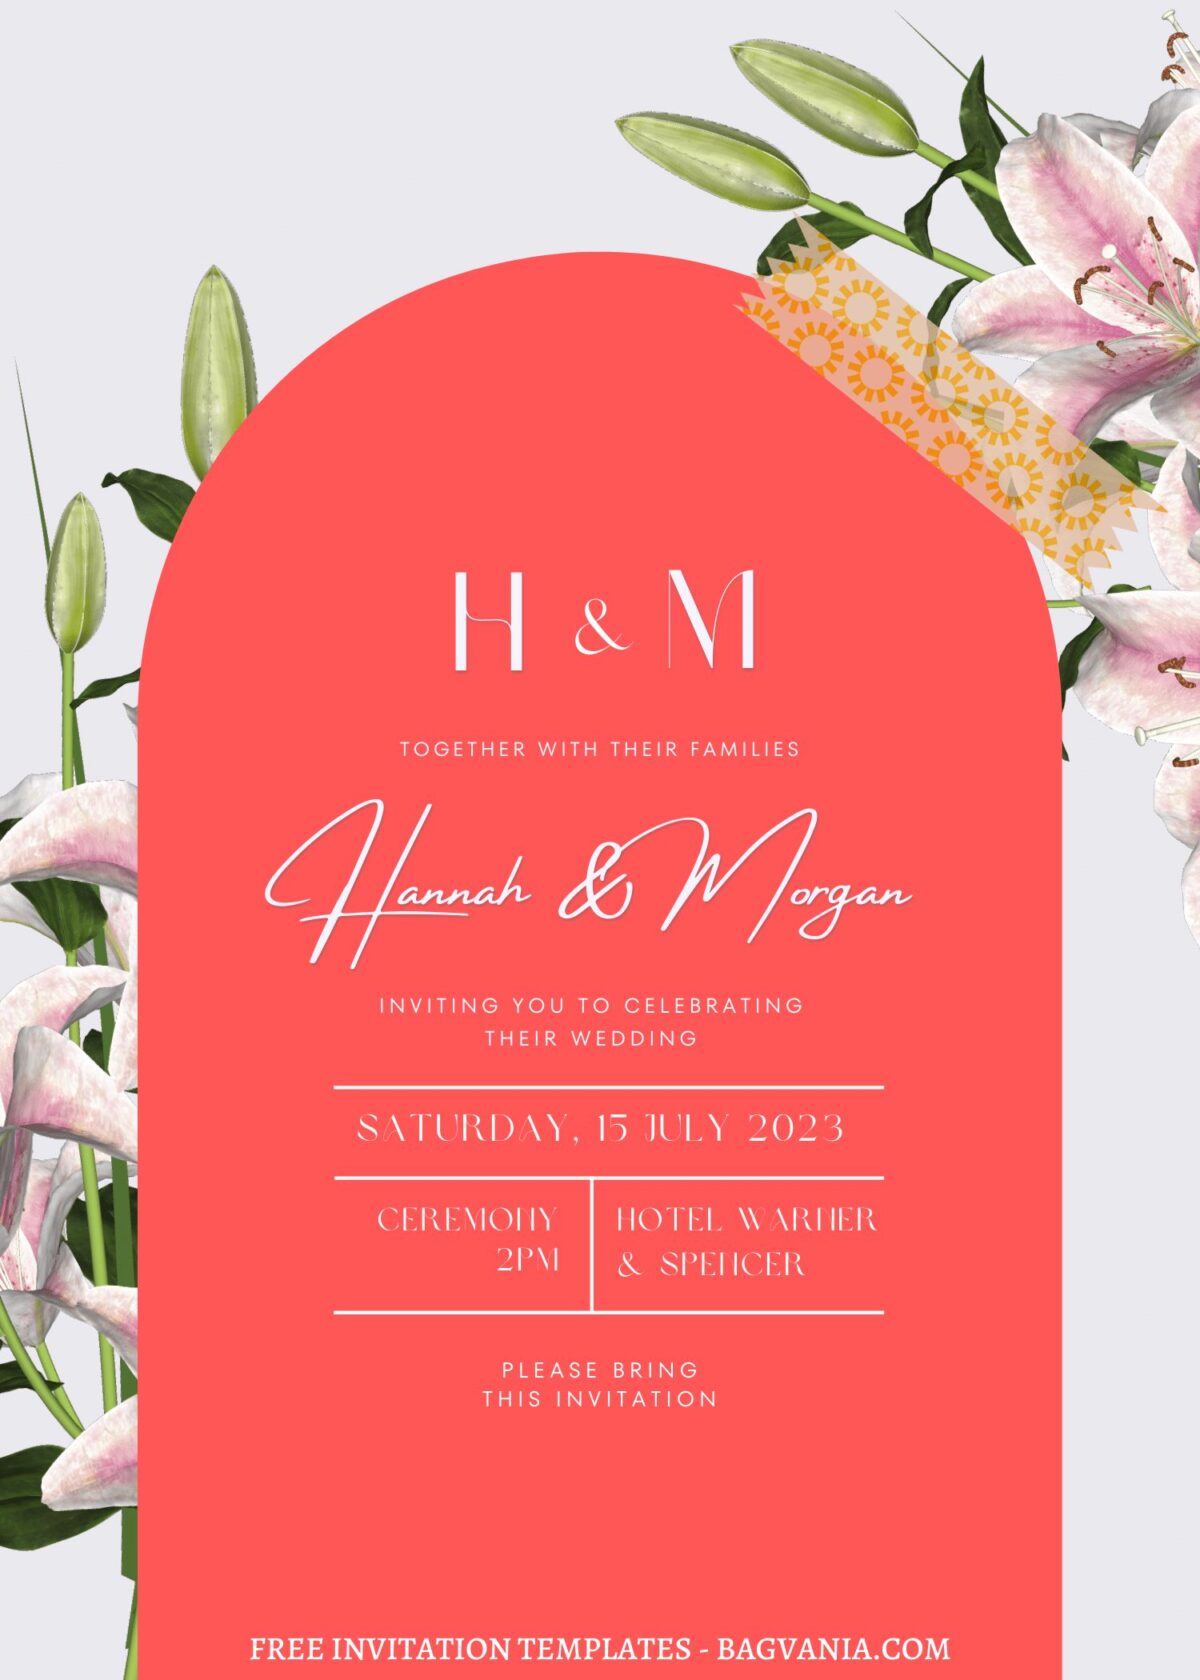 (Free) 7+ Cascading Stargazer Lily Canva Wedding Invitation Templates with delicate soft color scheme